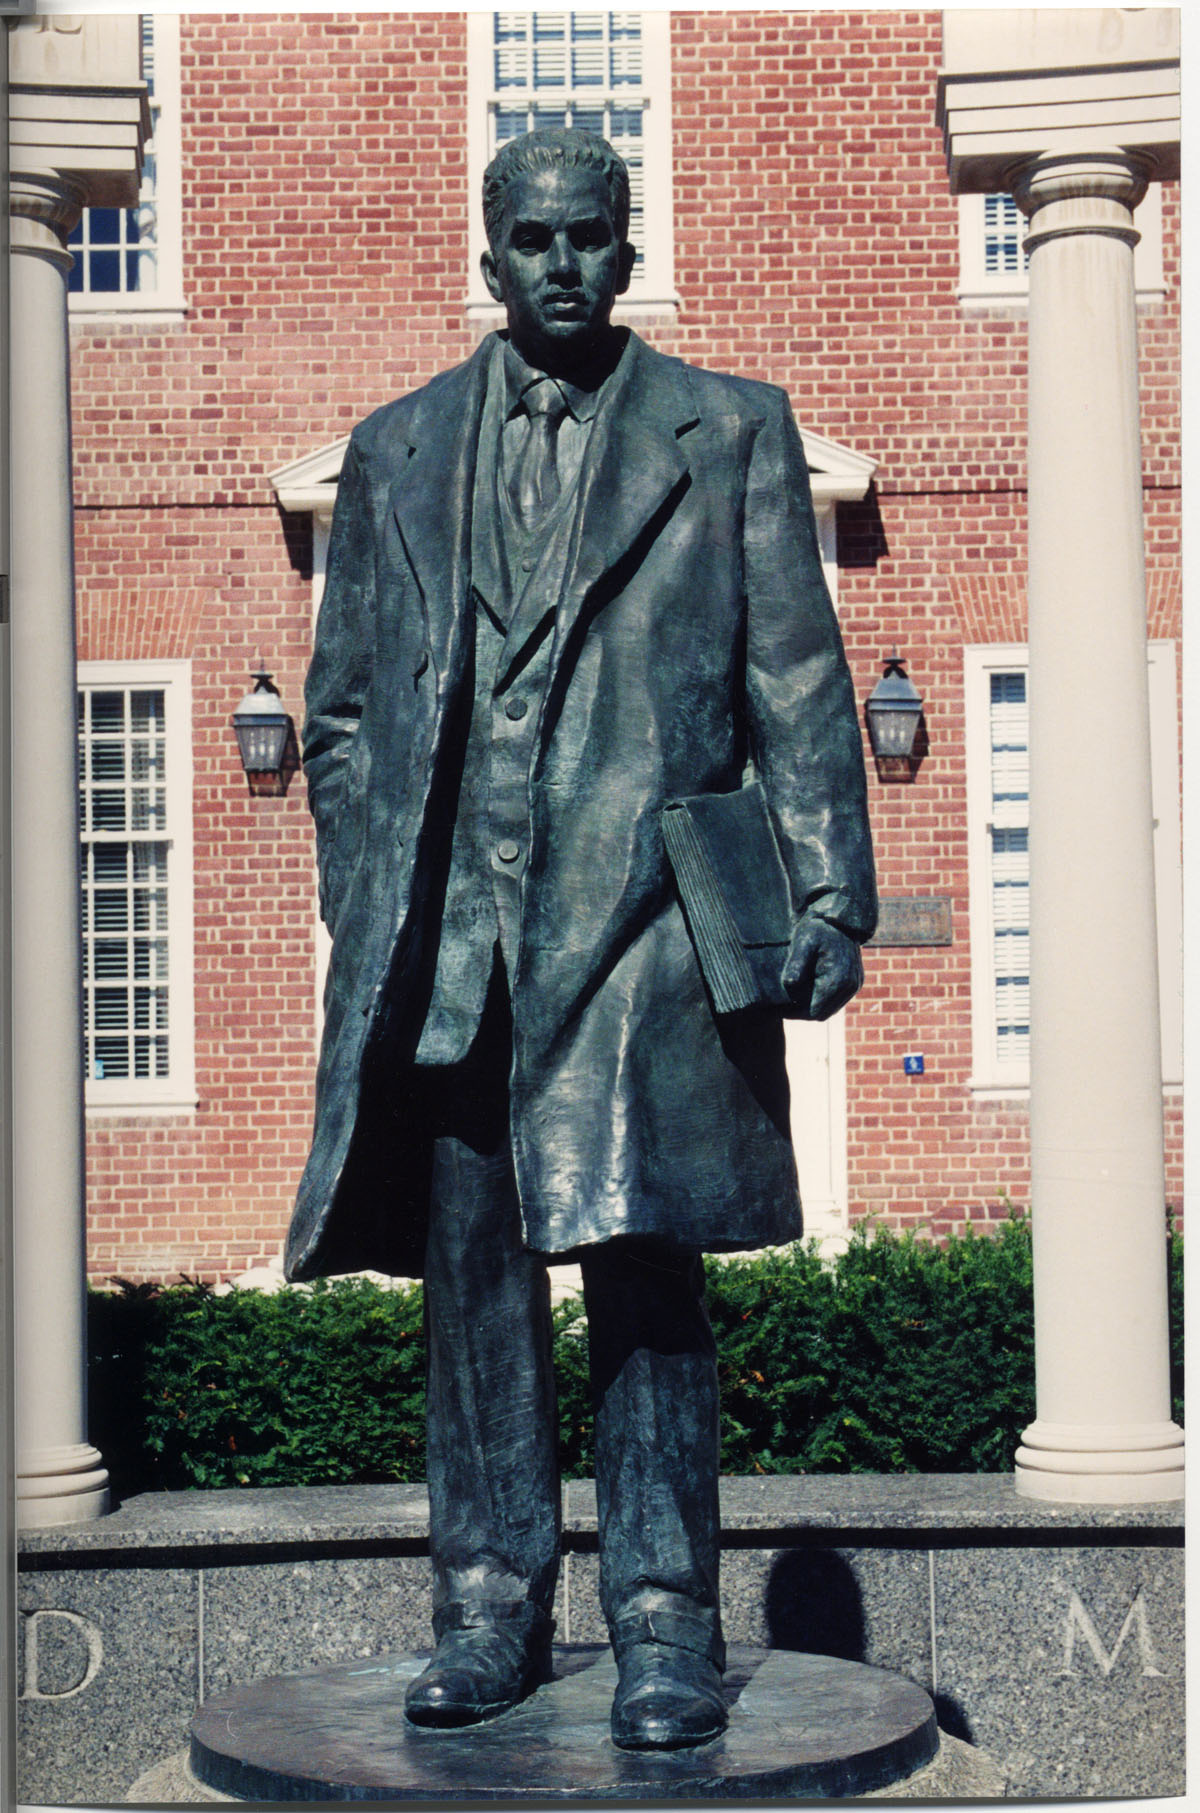 Sculpture: Thurgood Marshall by Antonio T. Mendez